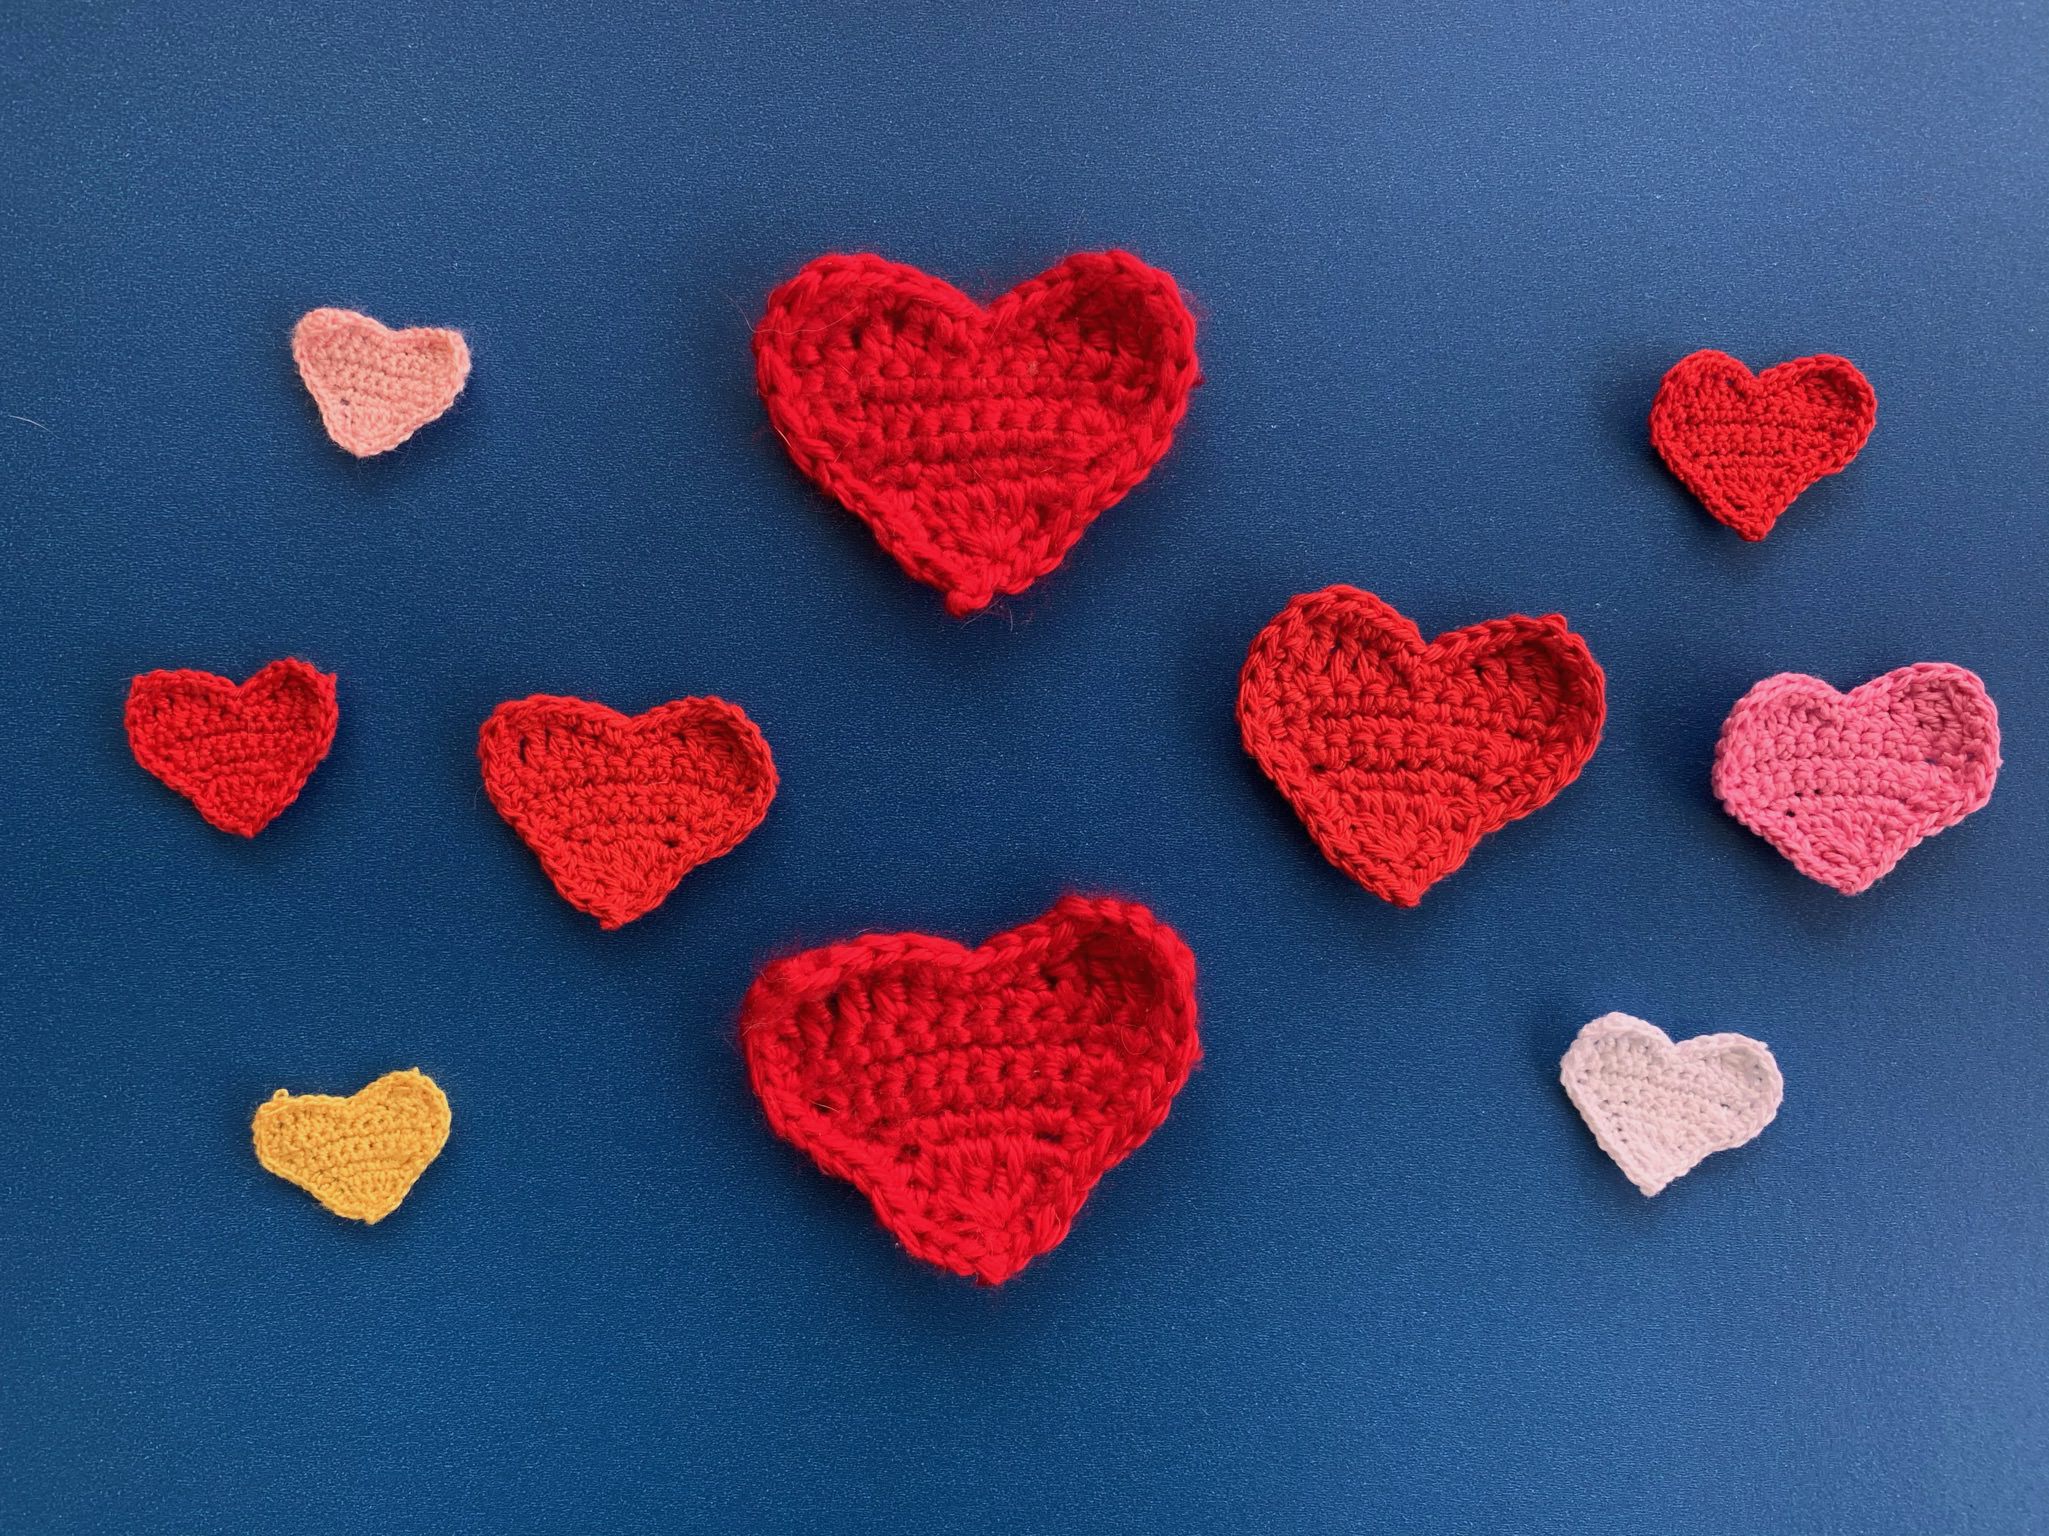 Finished crochet heart 2 ply group landscape